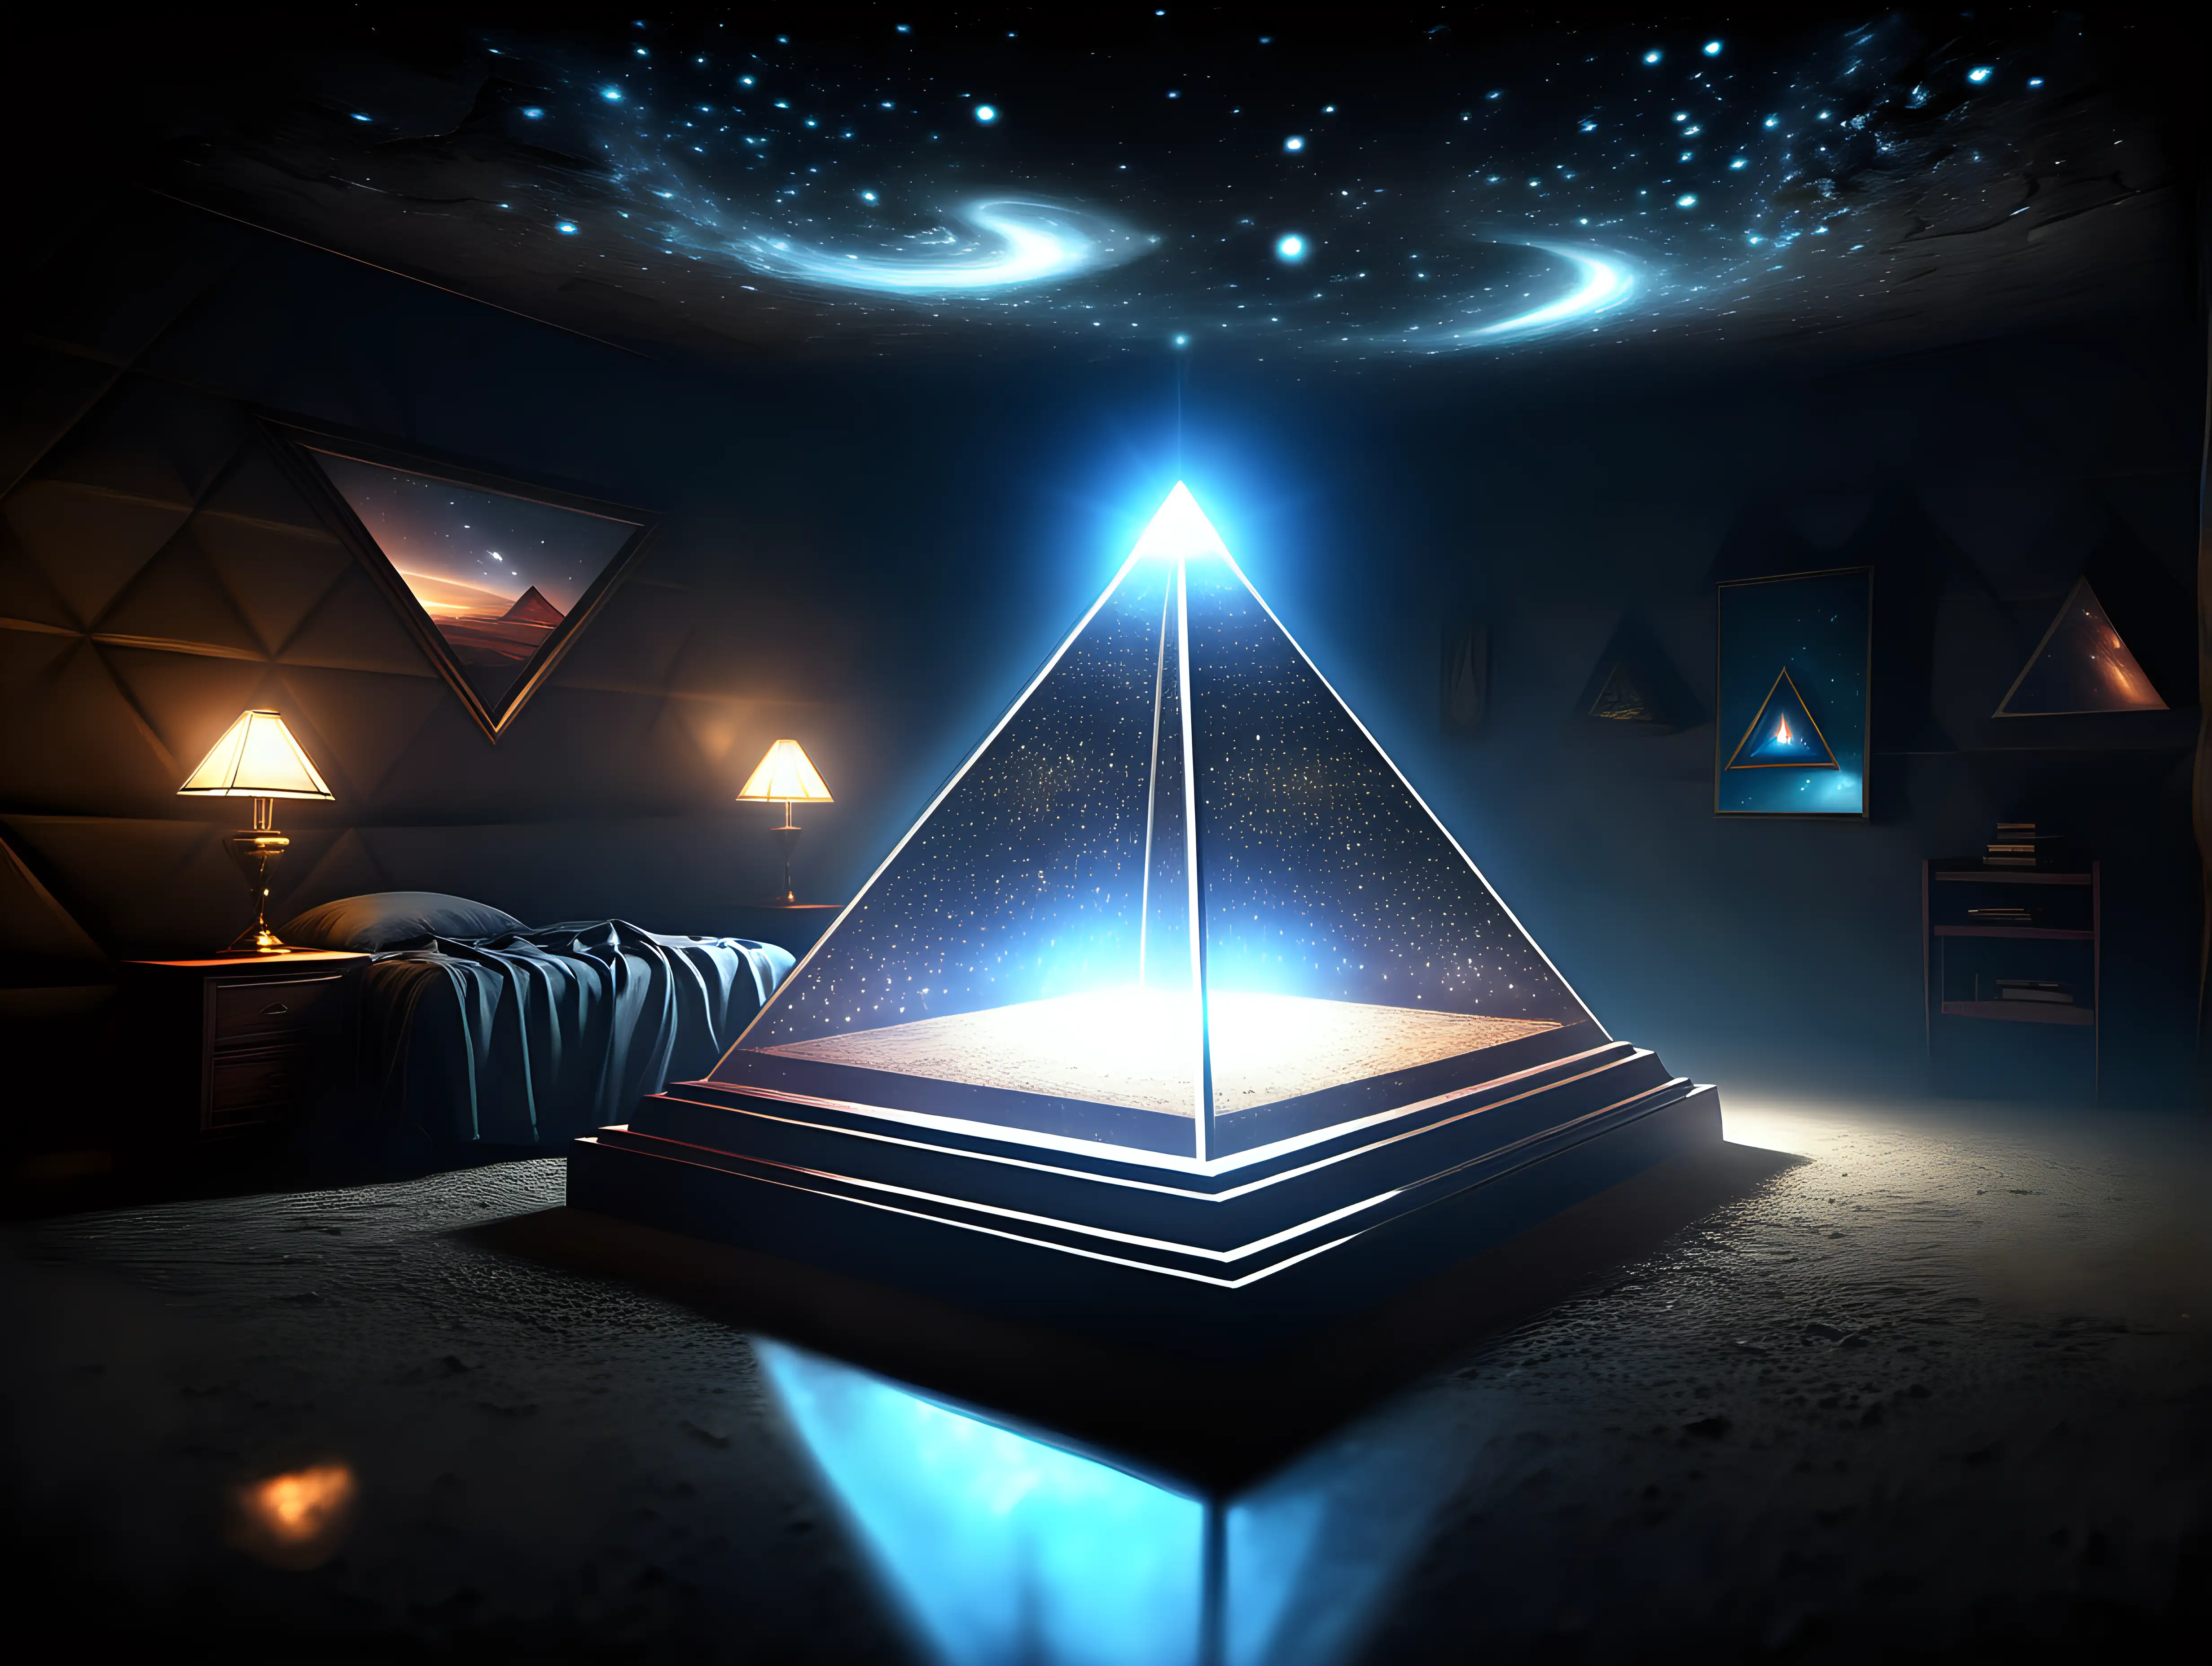 Cinematic Galactic Healing Pleiades Pyramid Light on Human Recipient